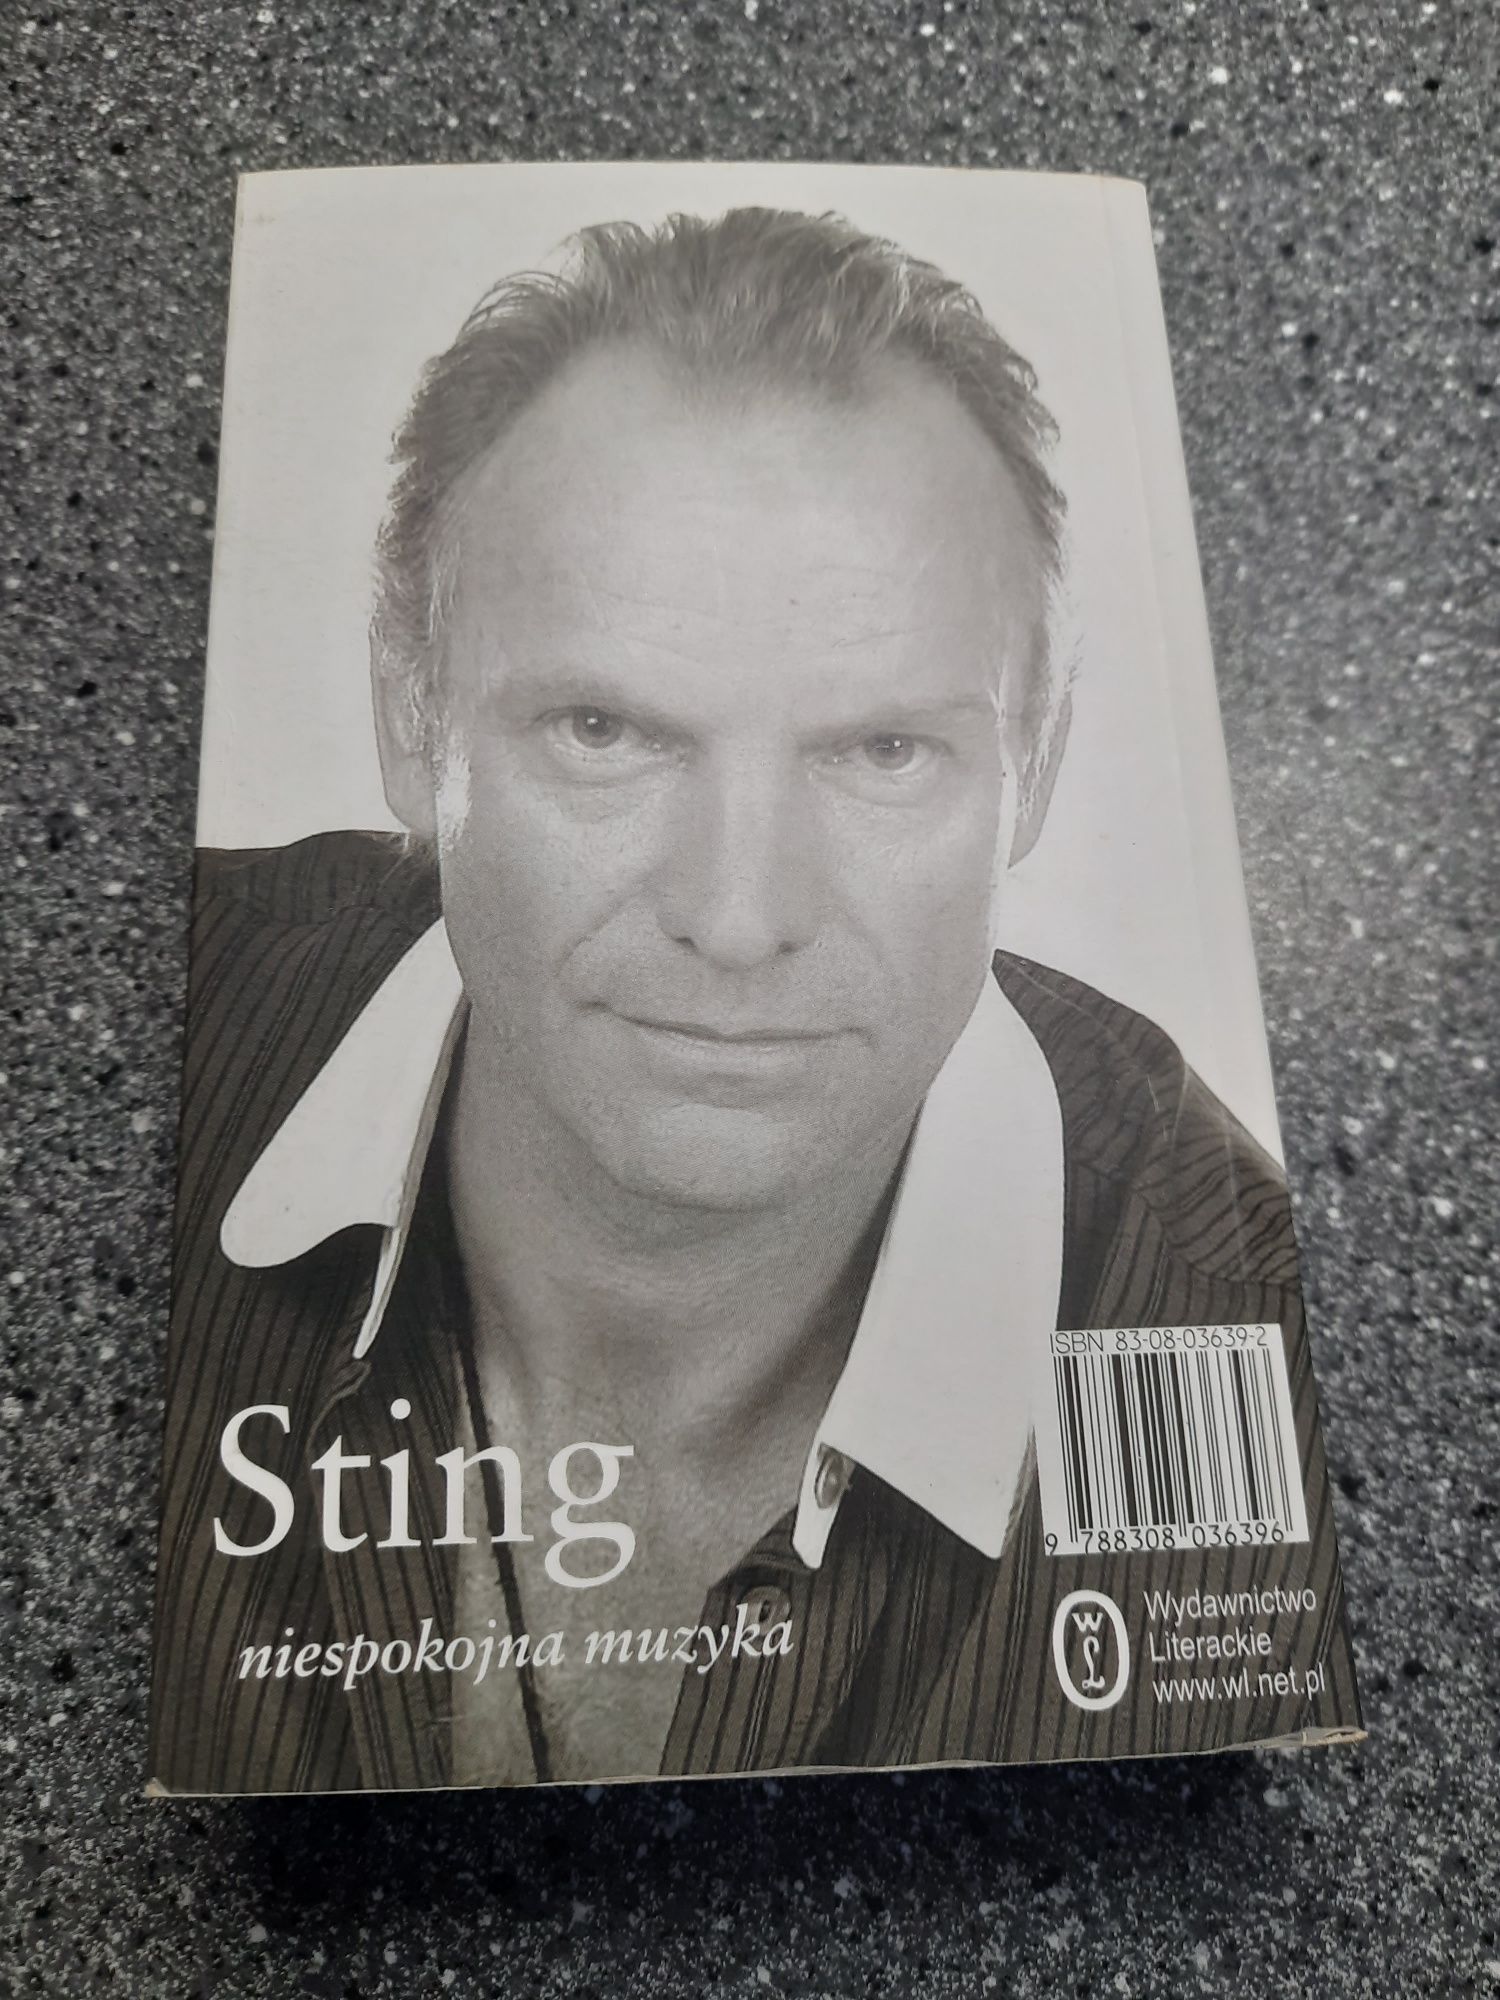 Sting niespokojna muzyka